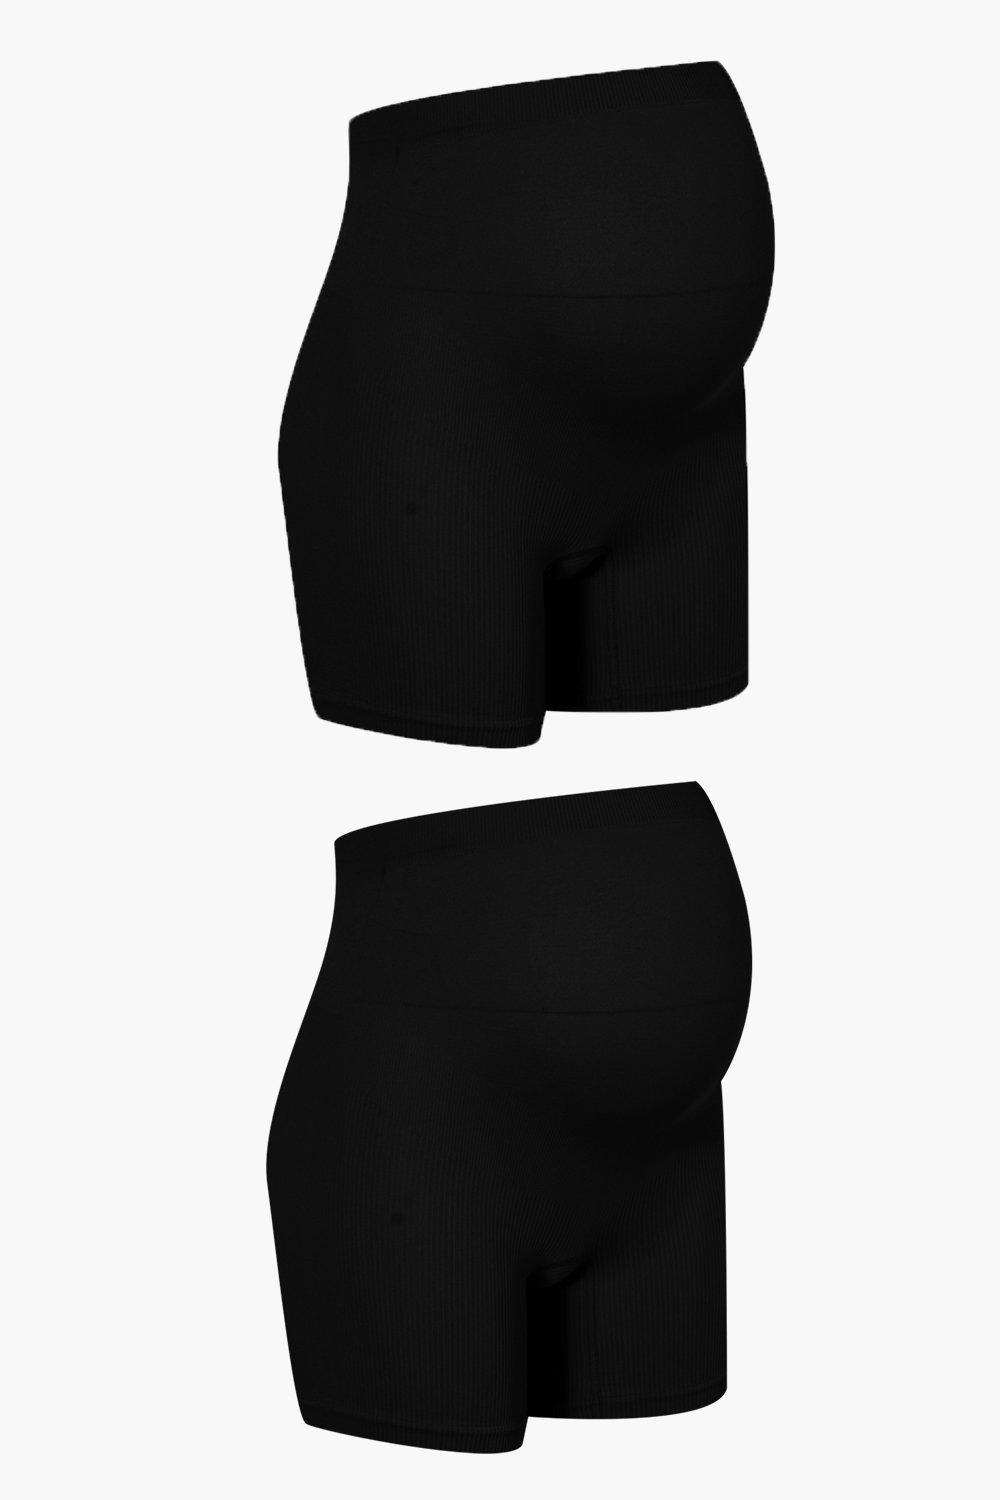 skpabo Pregnancy Shorts For Women Maternity Leggings Over Bump Cropped  Pregnant Pants